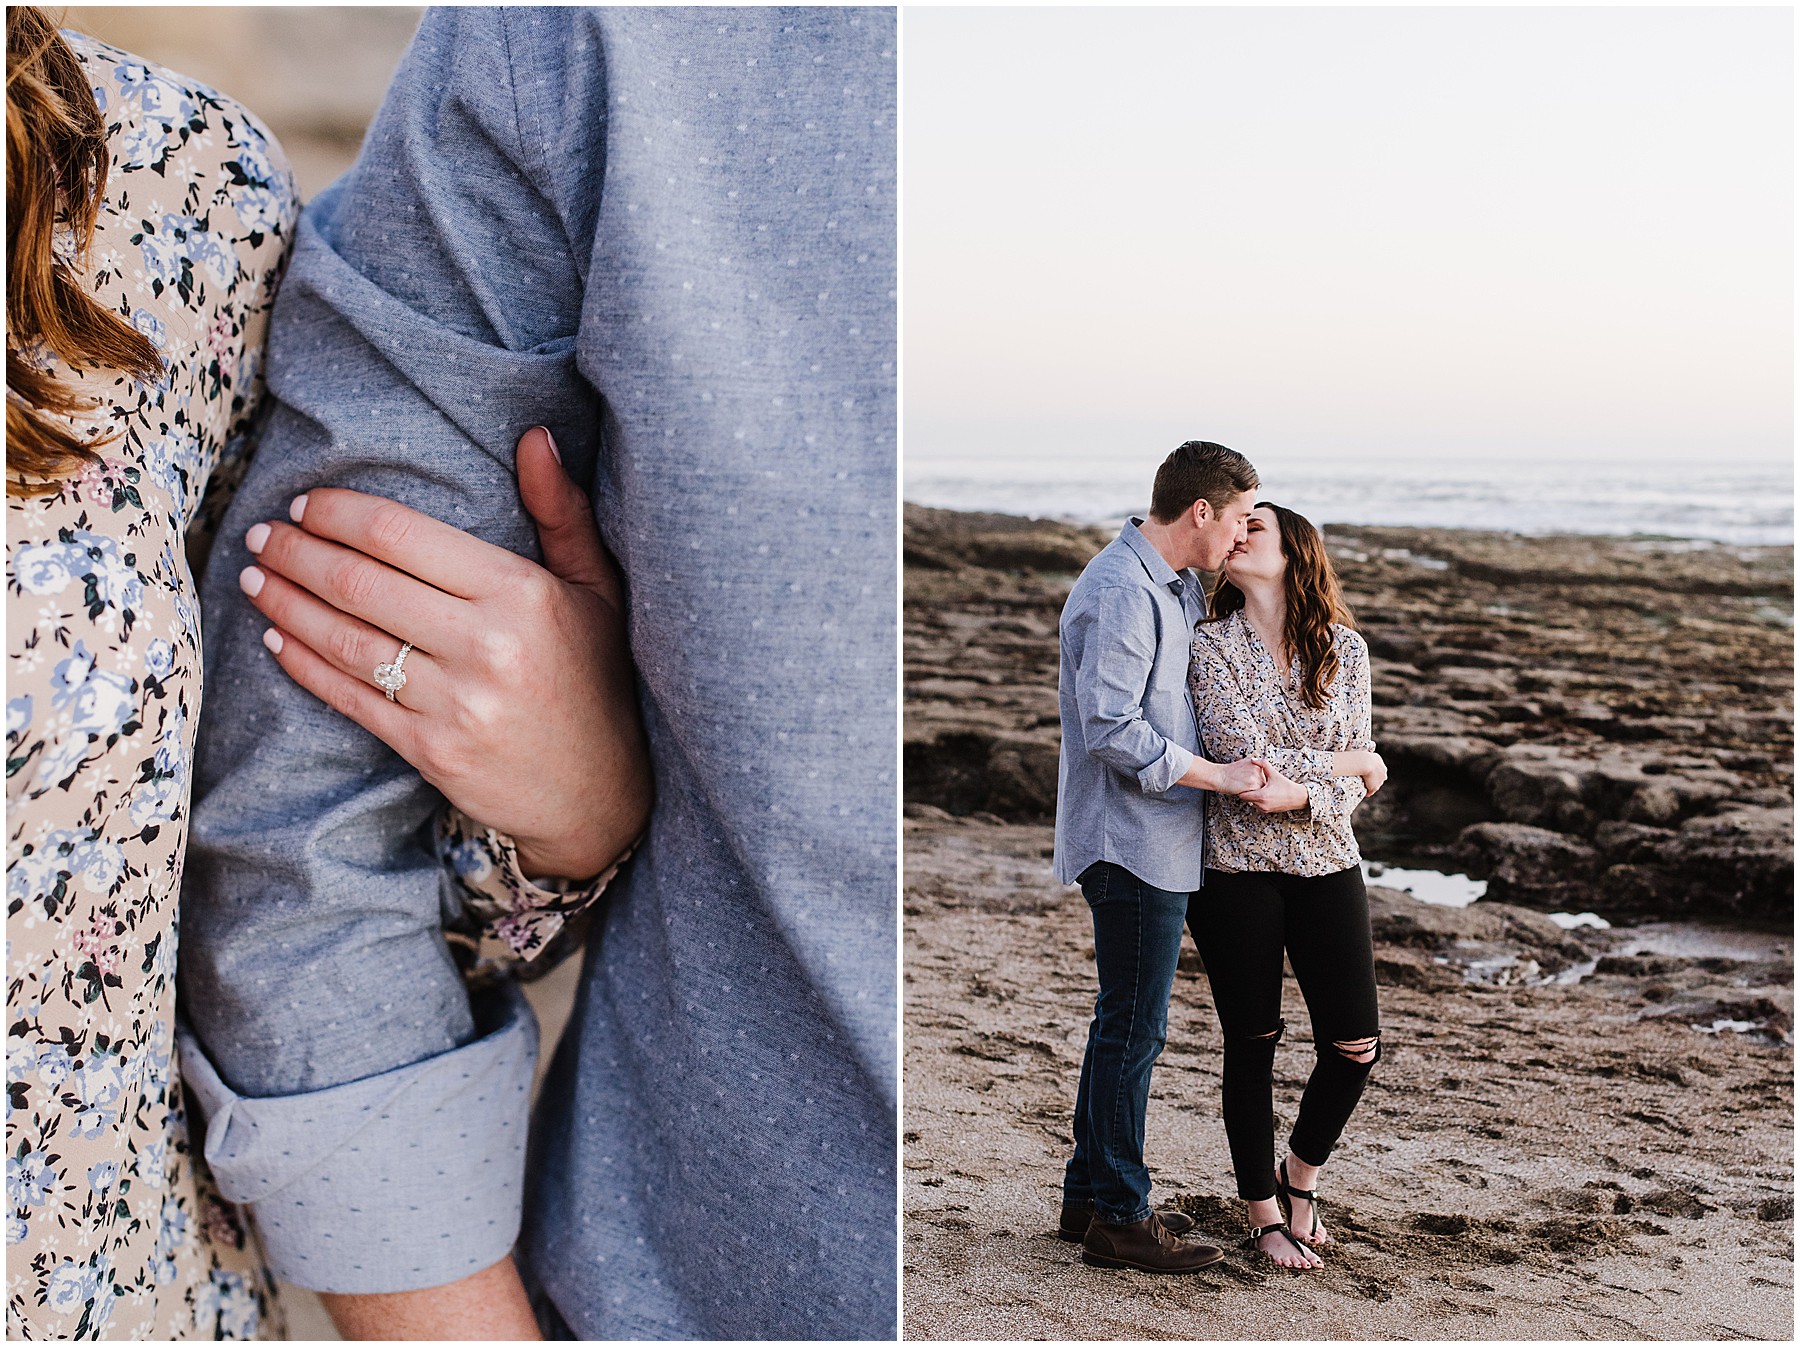 Julia & Nick Engagement at Shell Beach near The Cliffs Resort in California